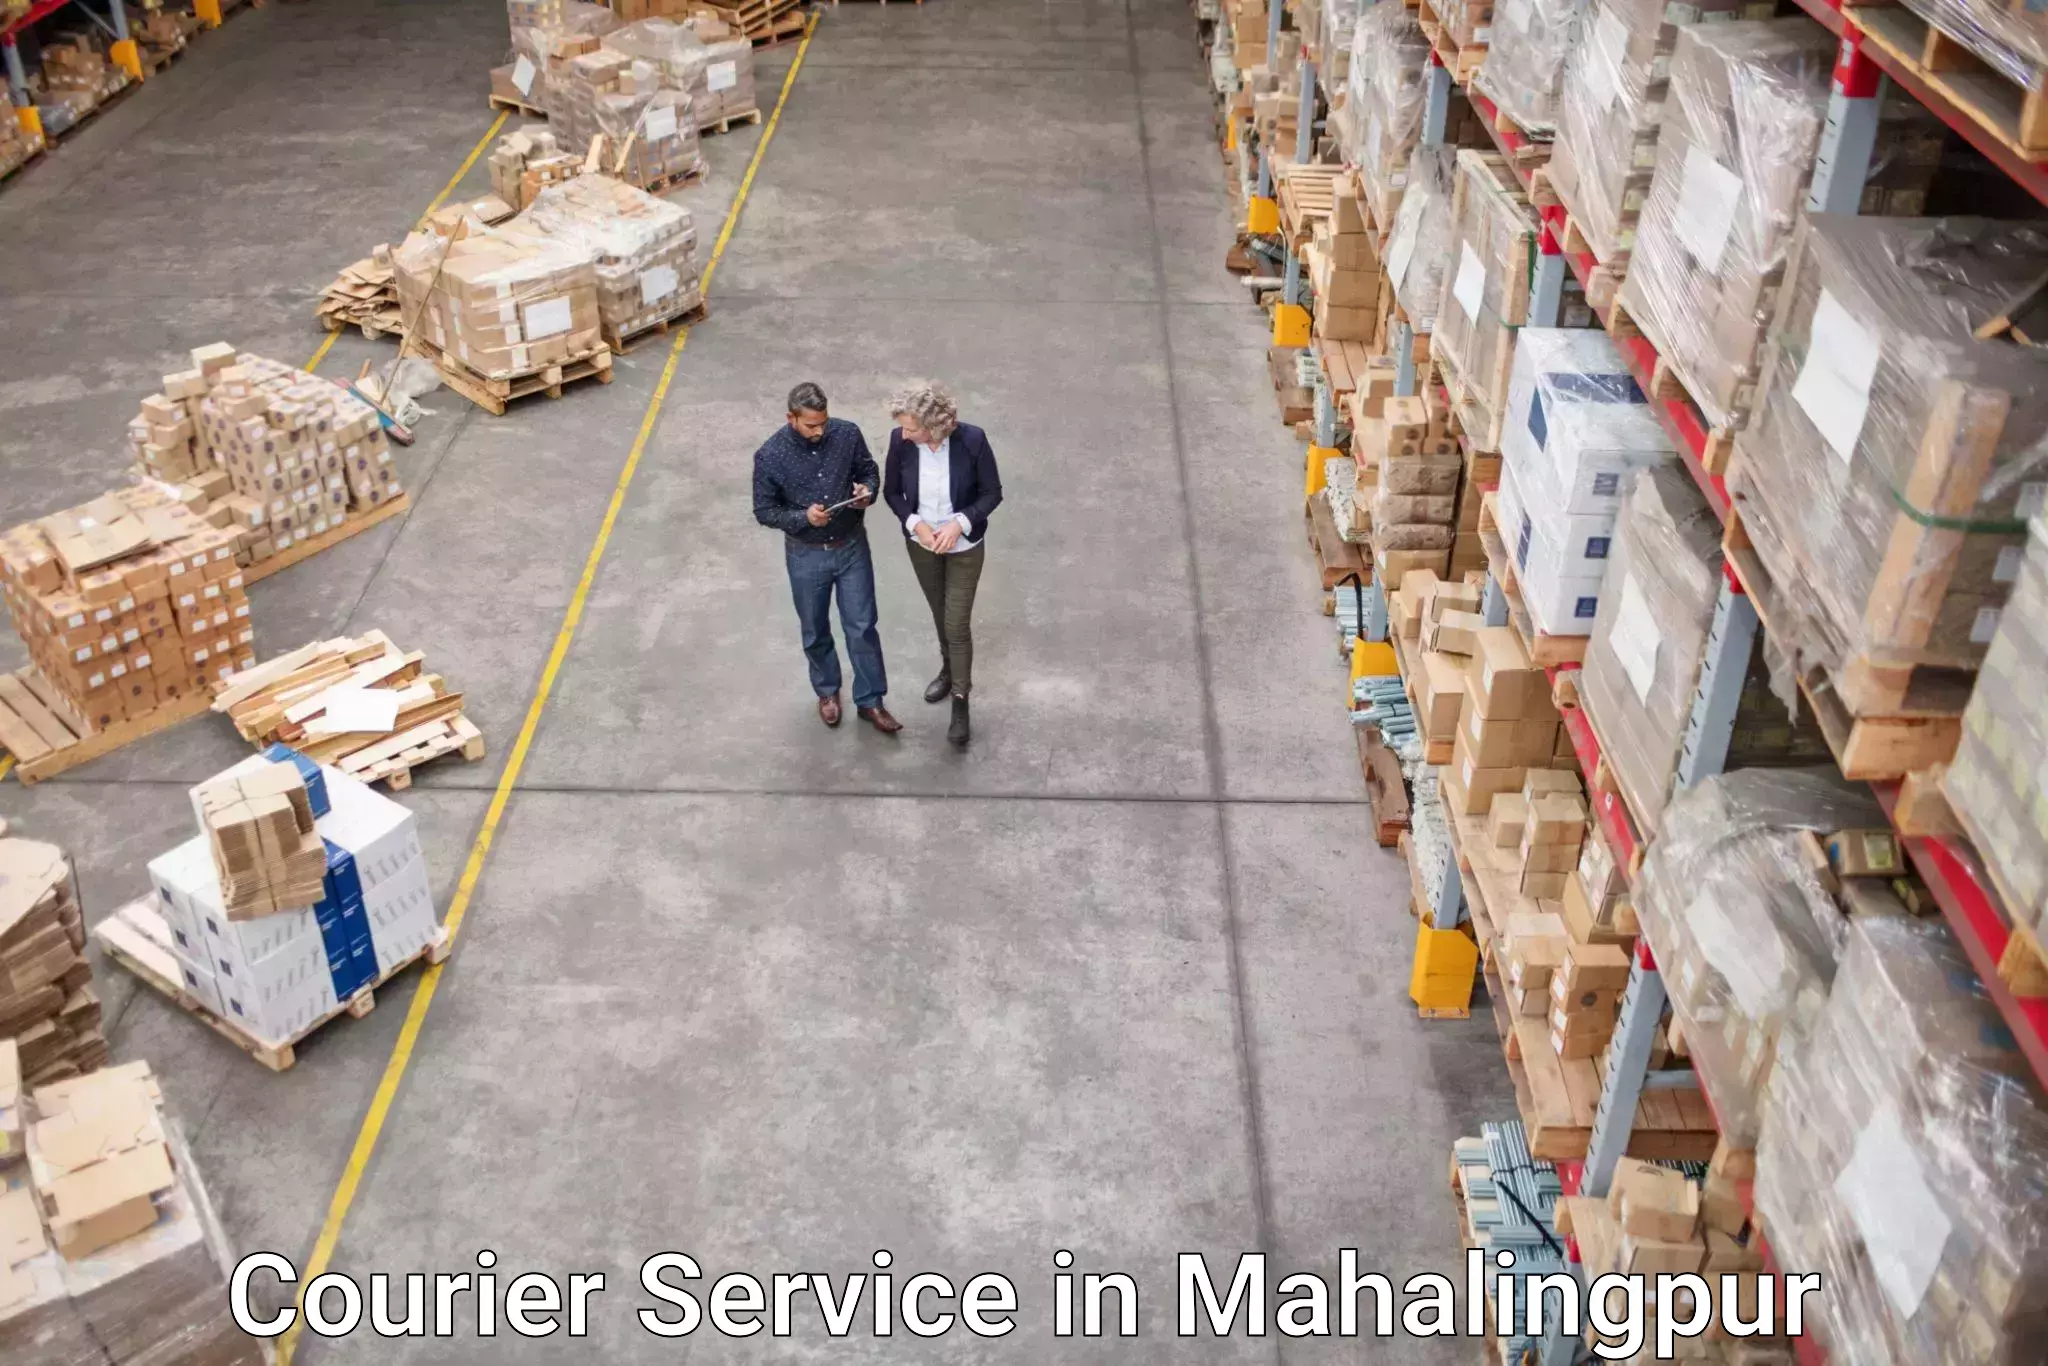 E-commerce shipping partnerships in Mahalingpur